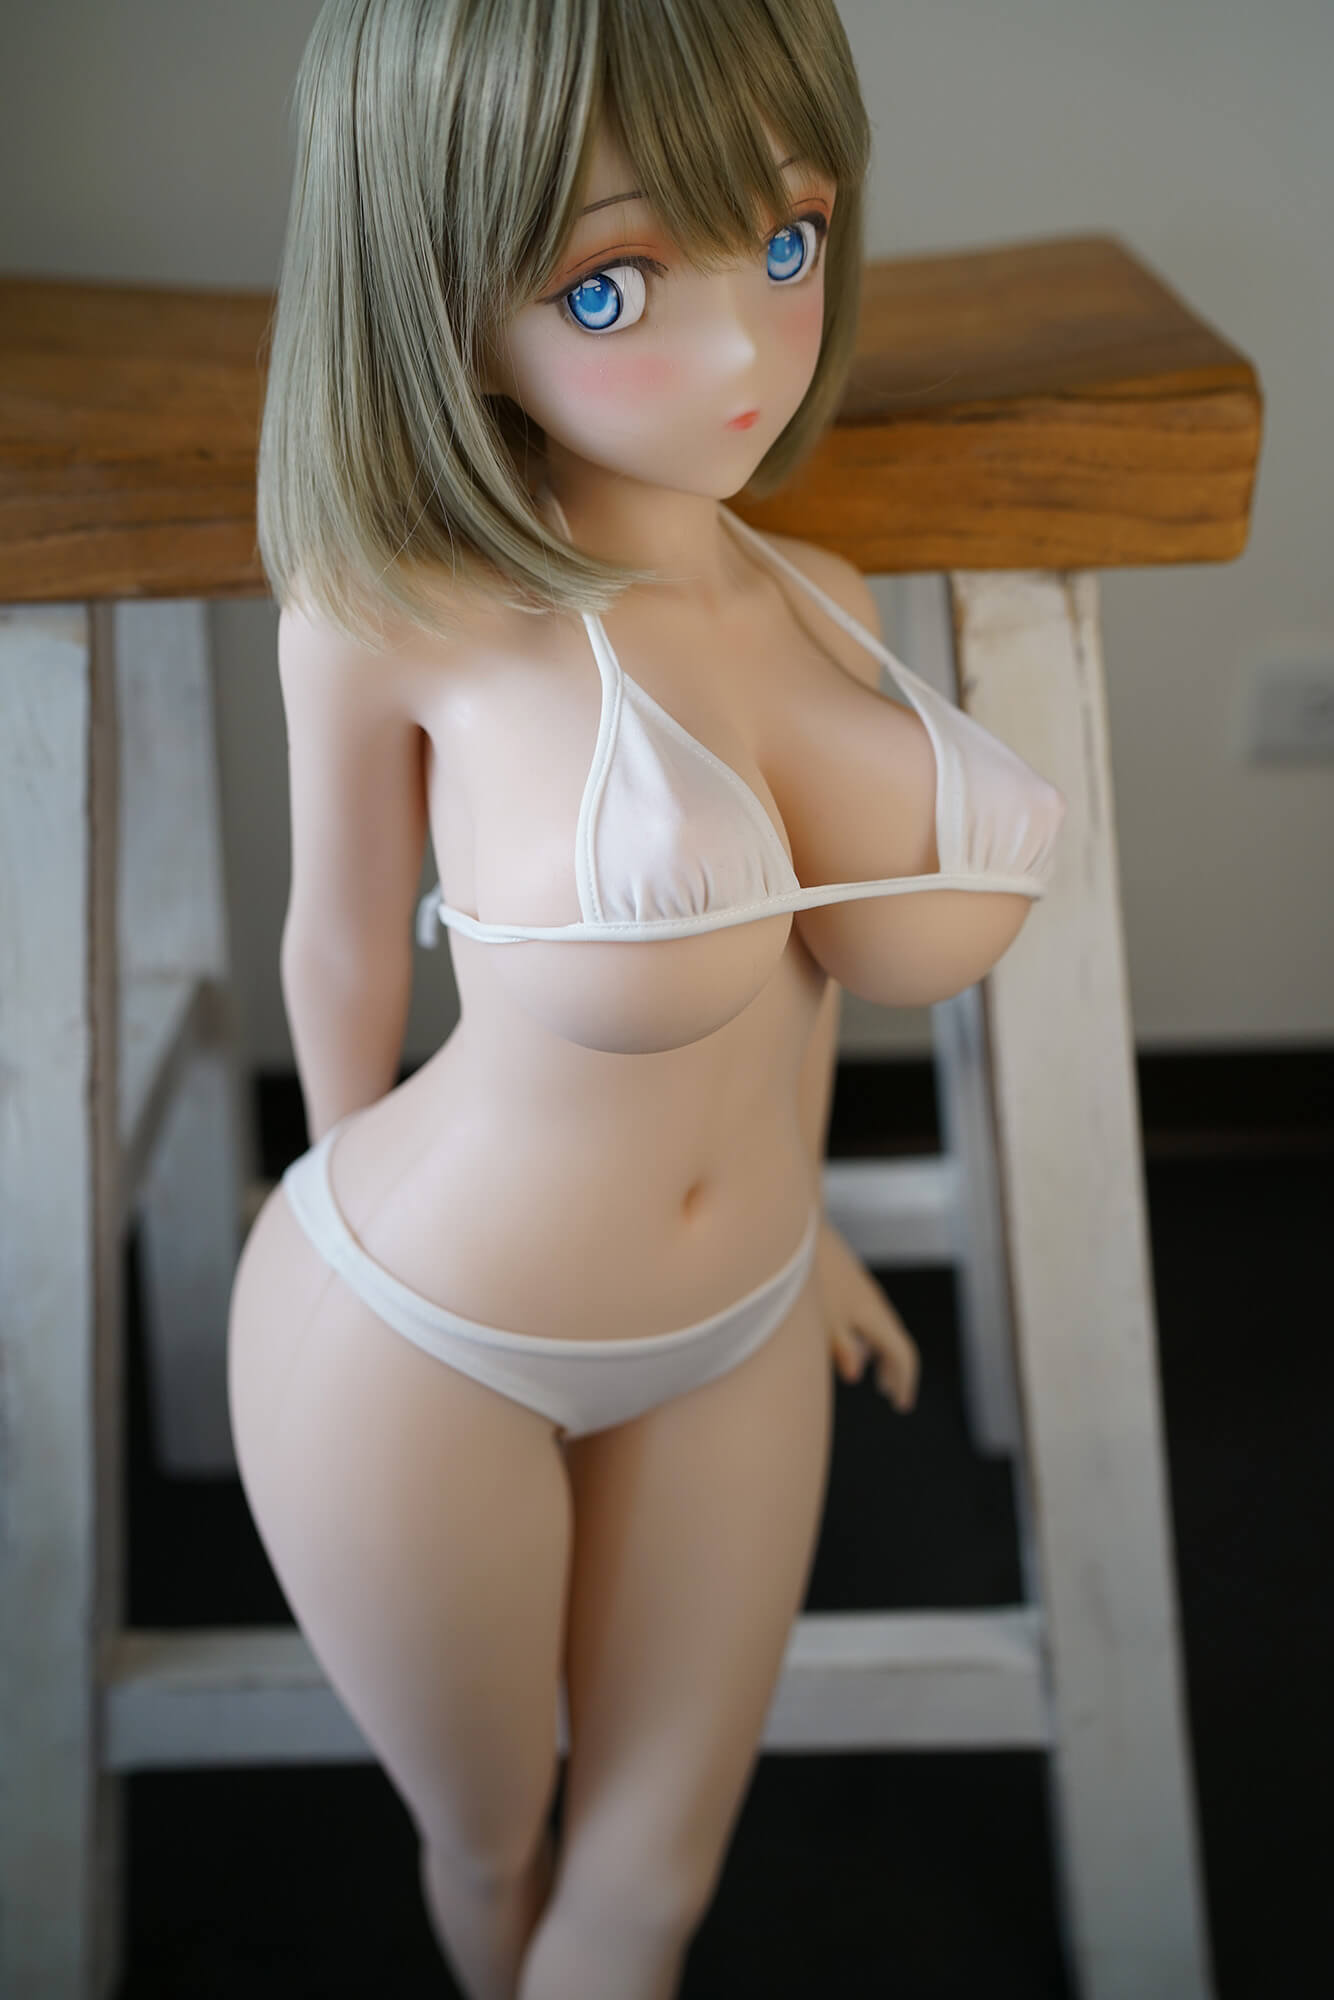 Pequeña muñeca sexual de anime con peluca gris